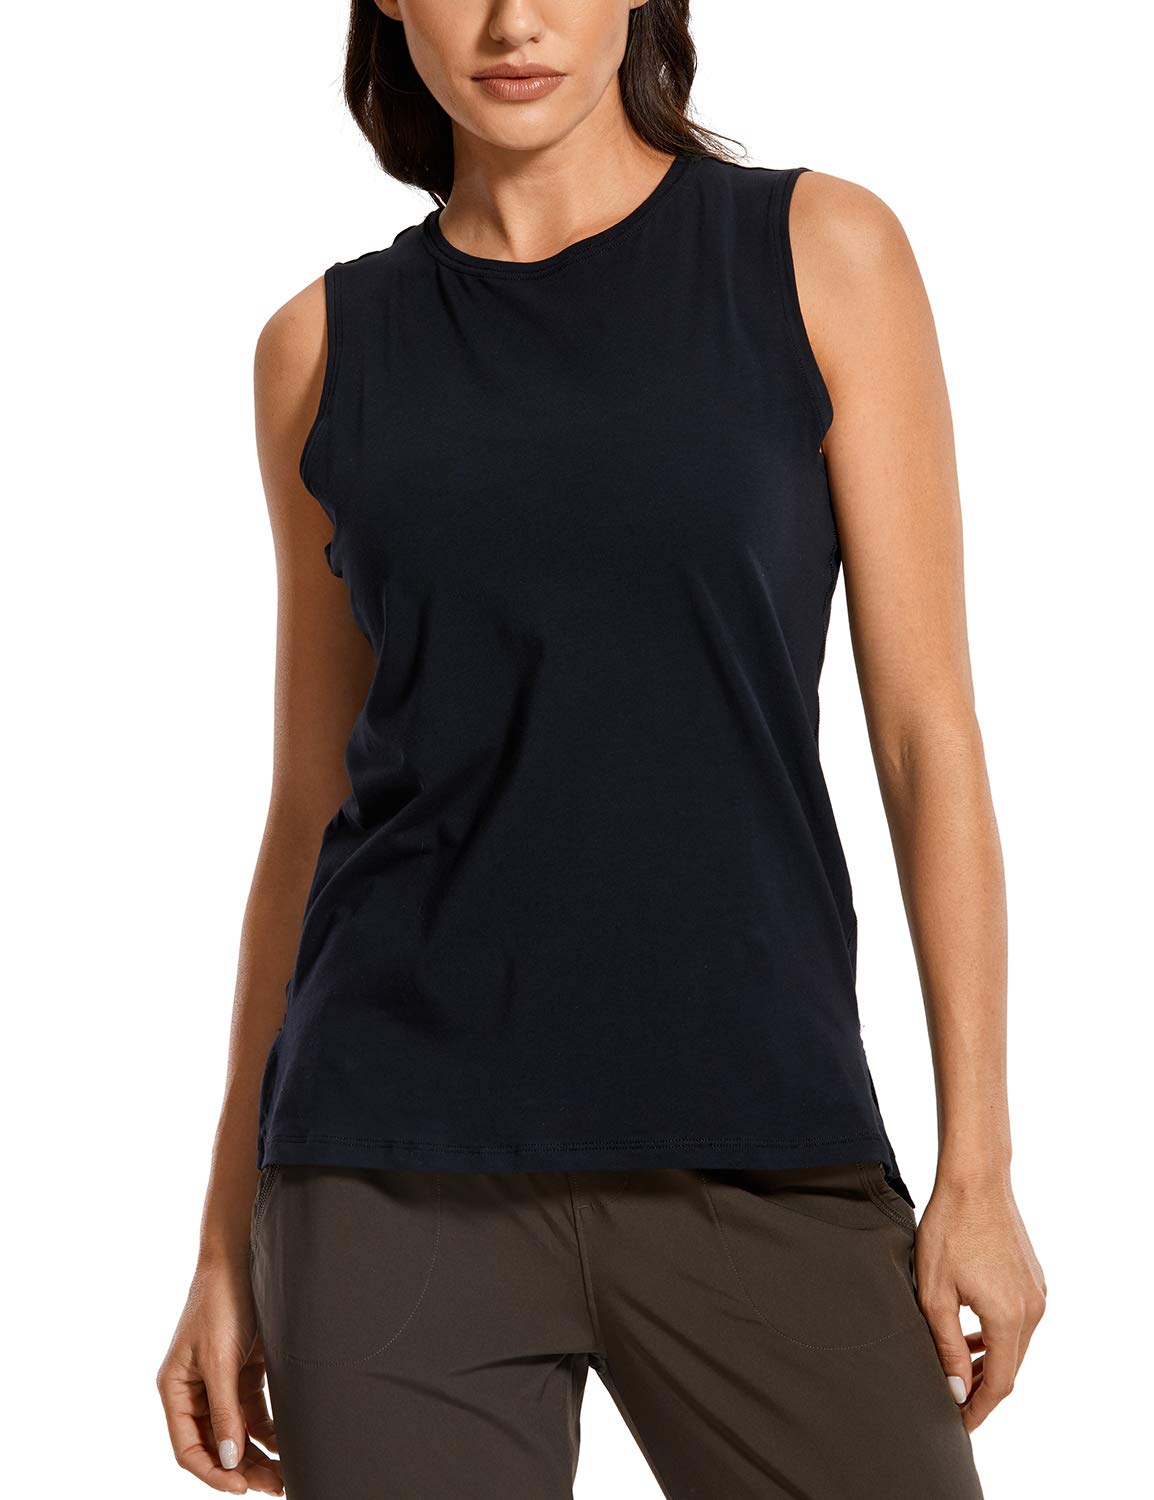 Best Deal for CRZ YOGA Women's Pima Cotton Workout Sleeveless Shirts